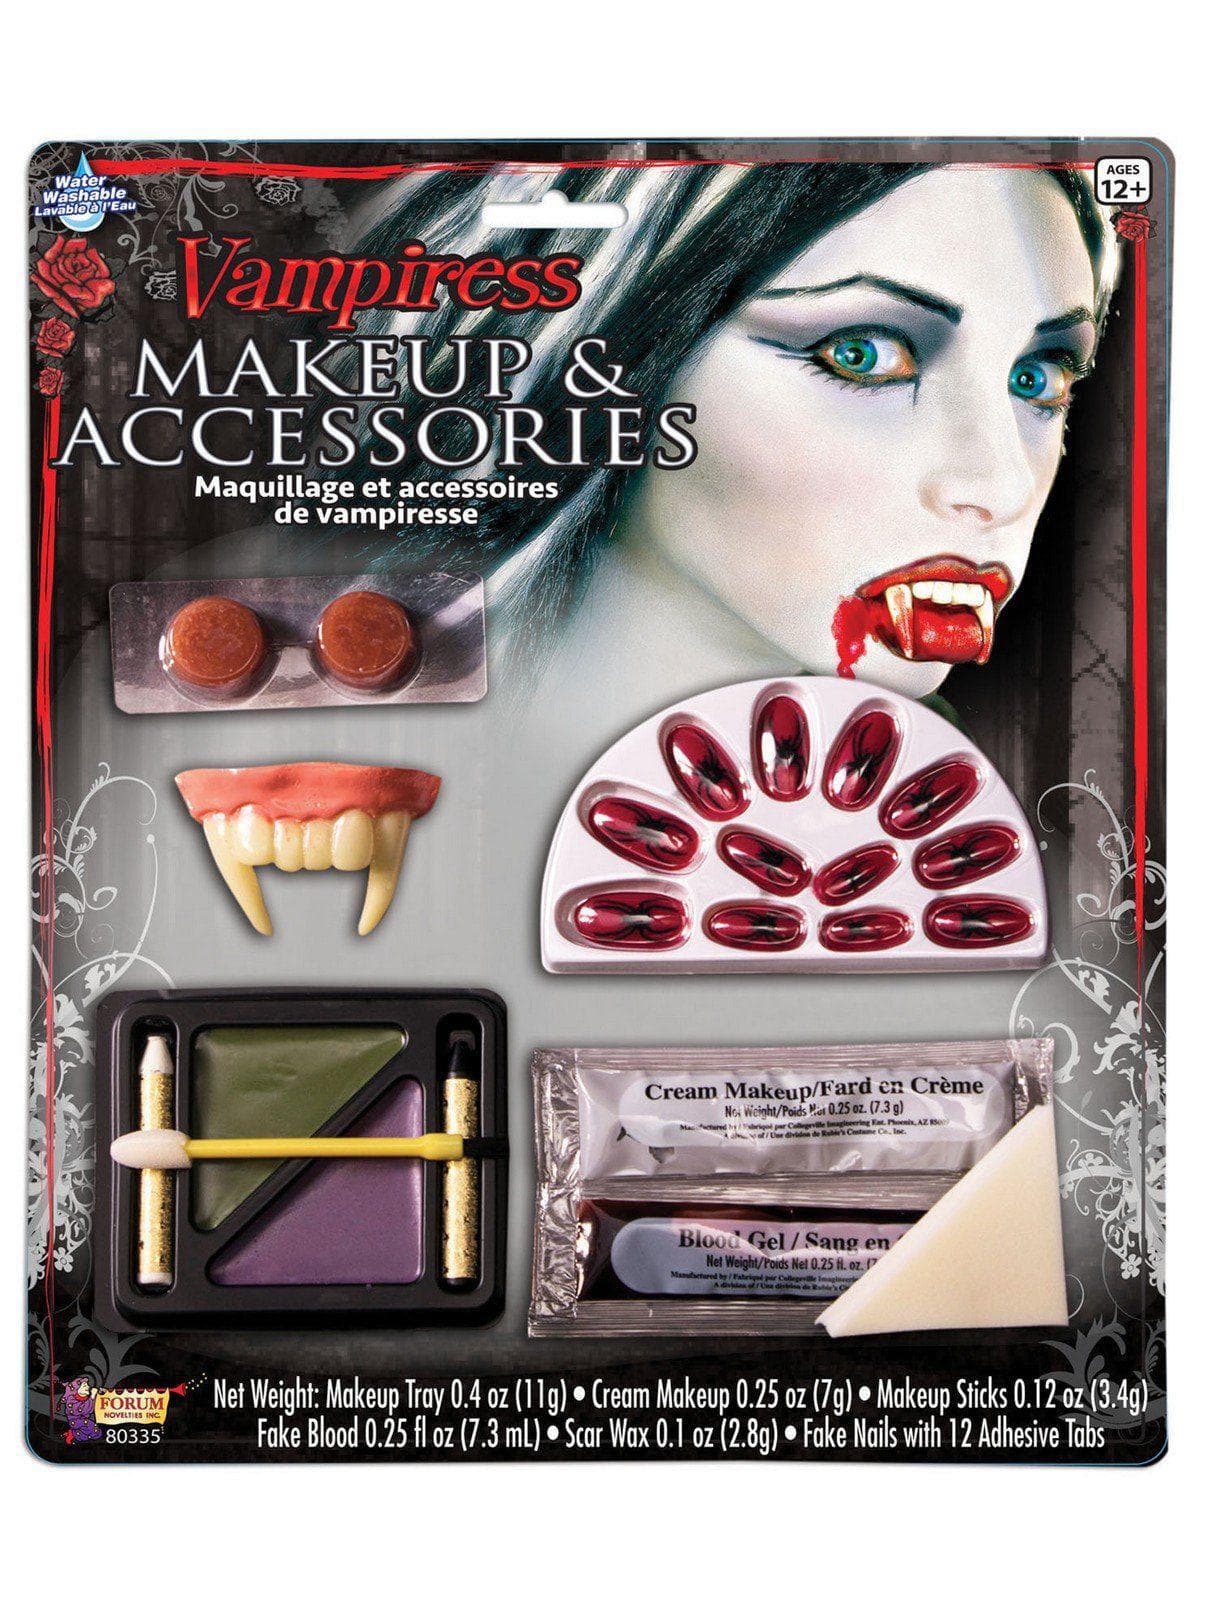 Vampiress Makeup and Accessory Set - costumes.com